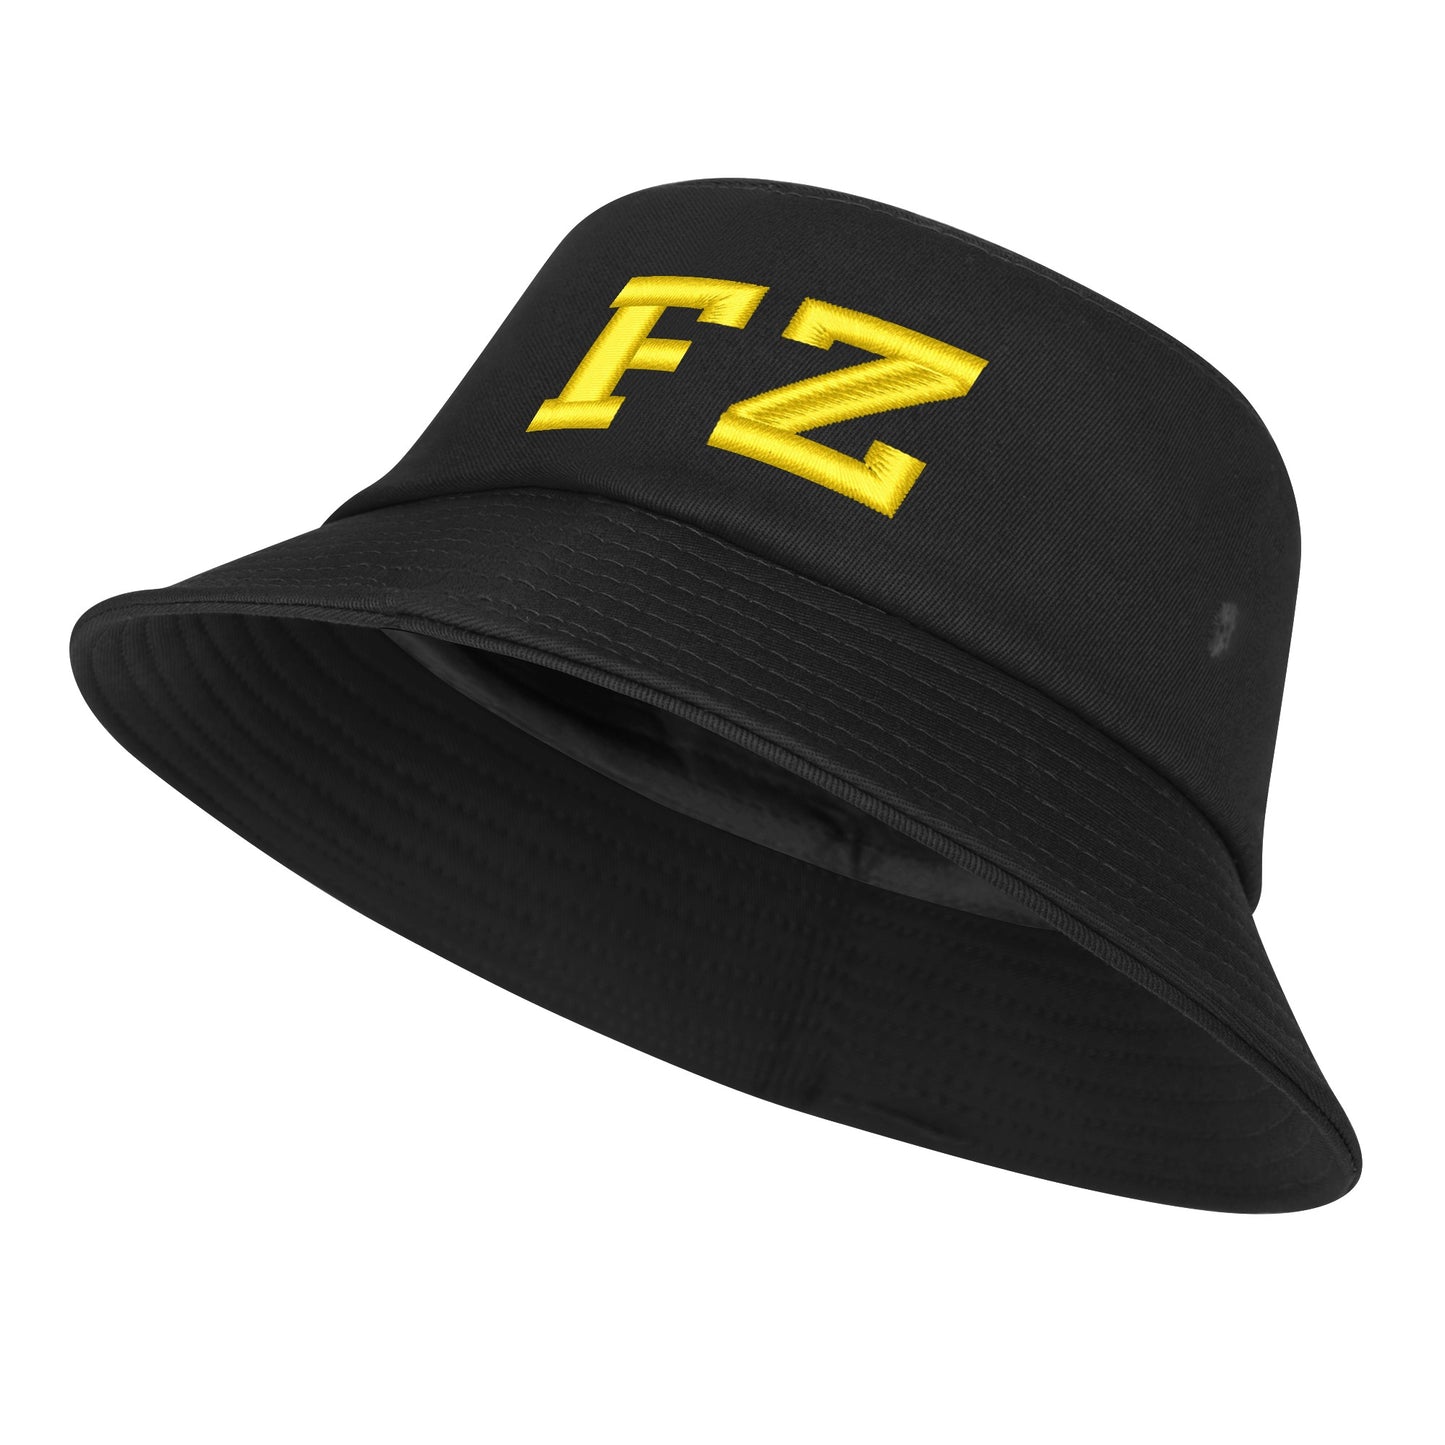 Sombreros de pescador bordados unisex FZ